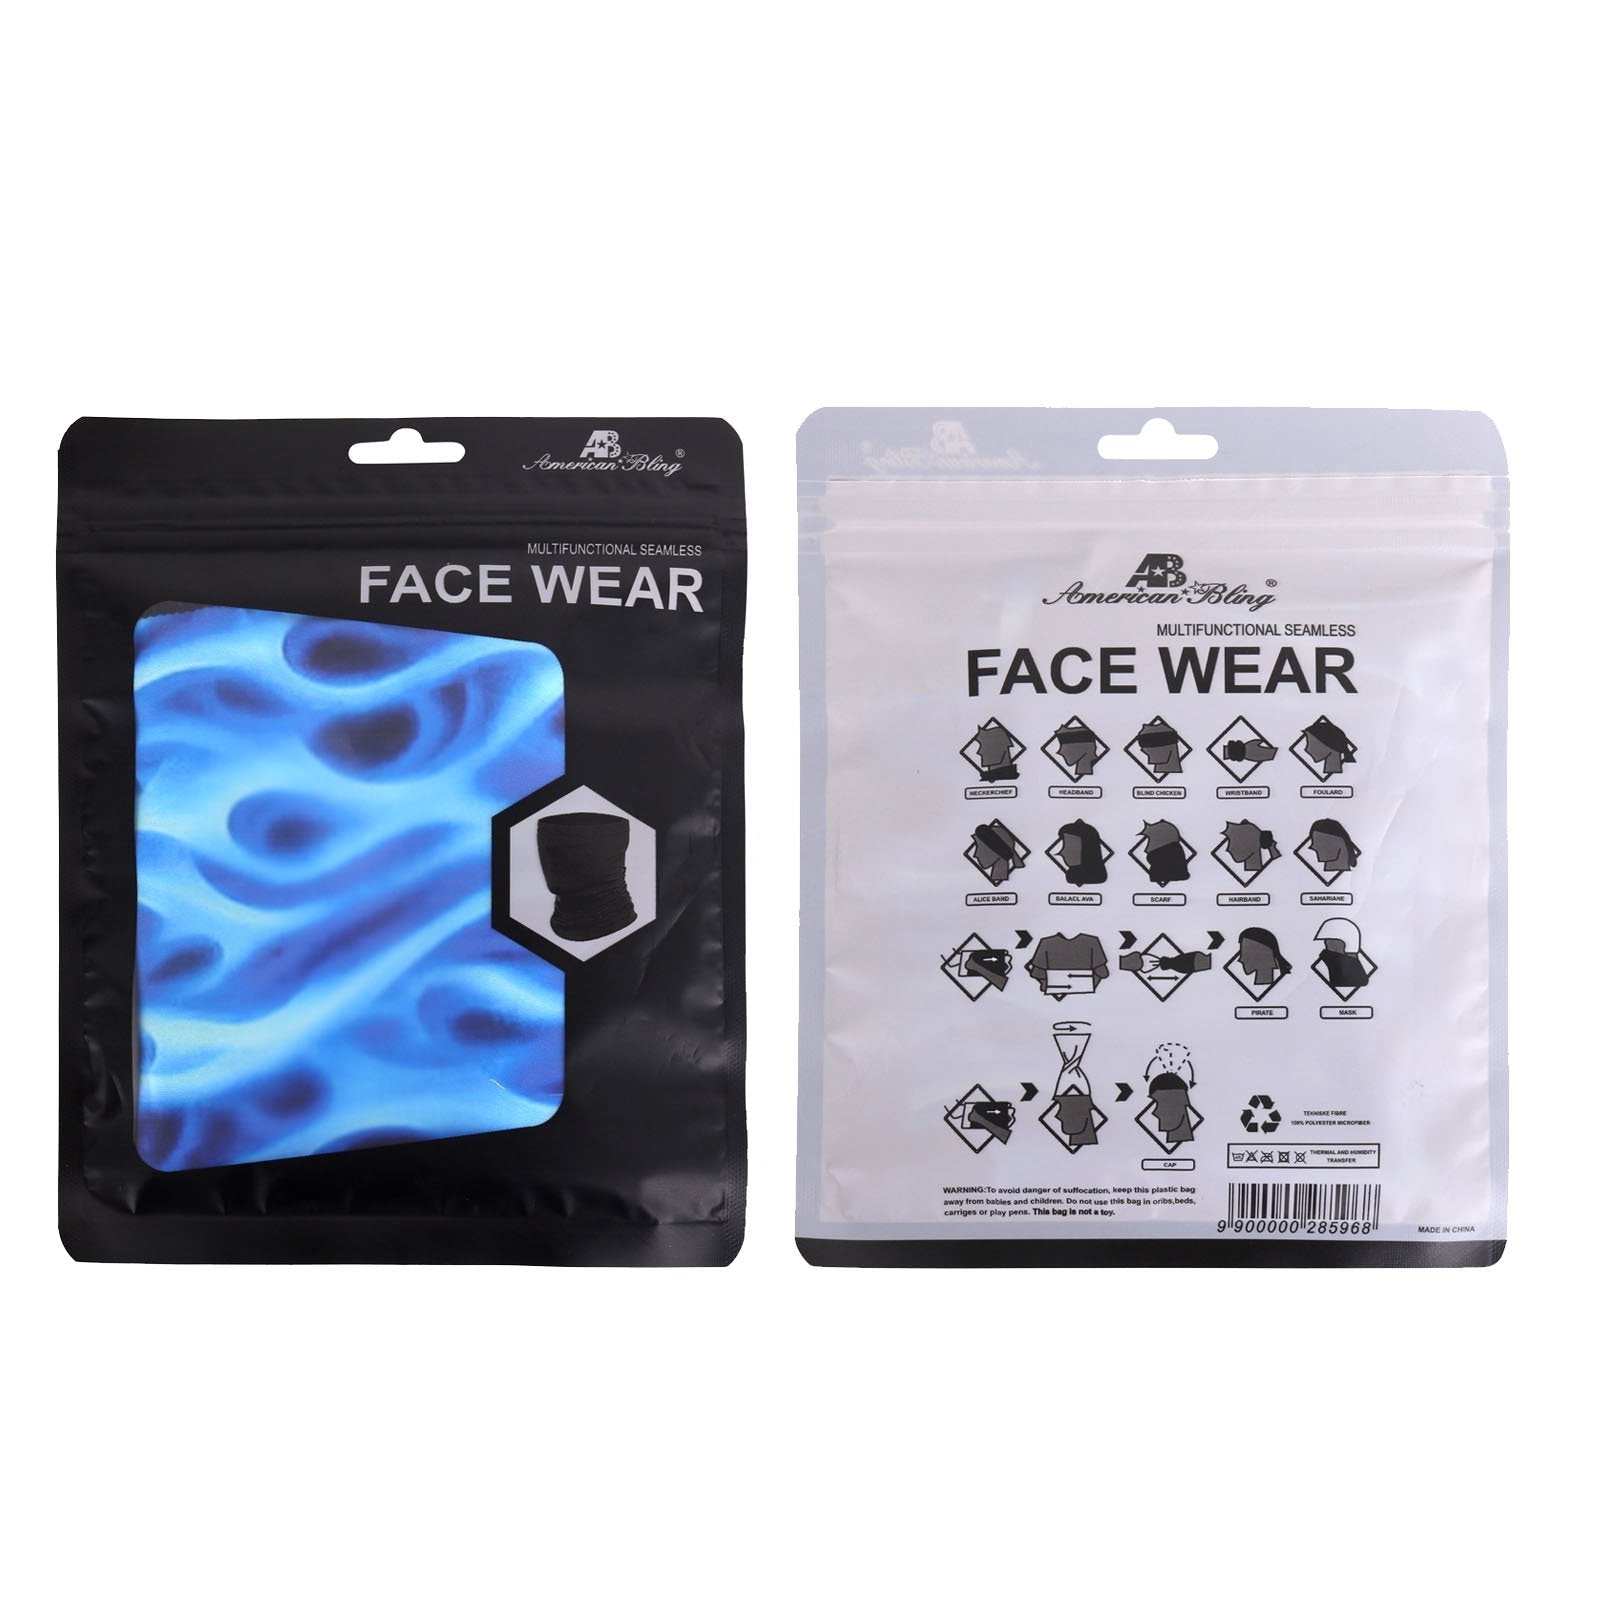 Camo Flag Design Print Neck Gaiter Face Mask Reusable, Washable Bandana /Head Wrap Scarf-1Pcs/Pack - Cowgirl Wear